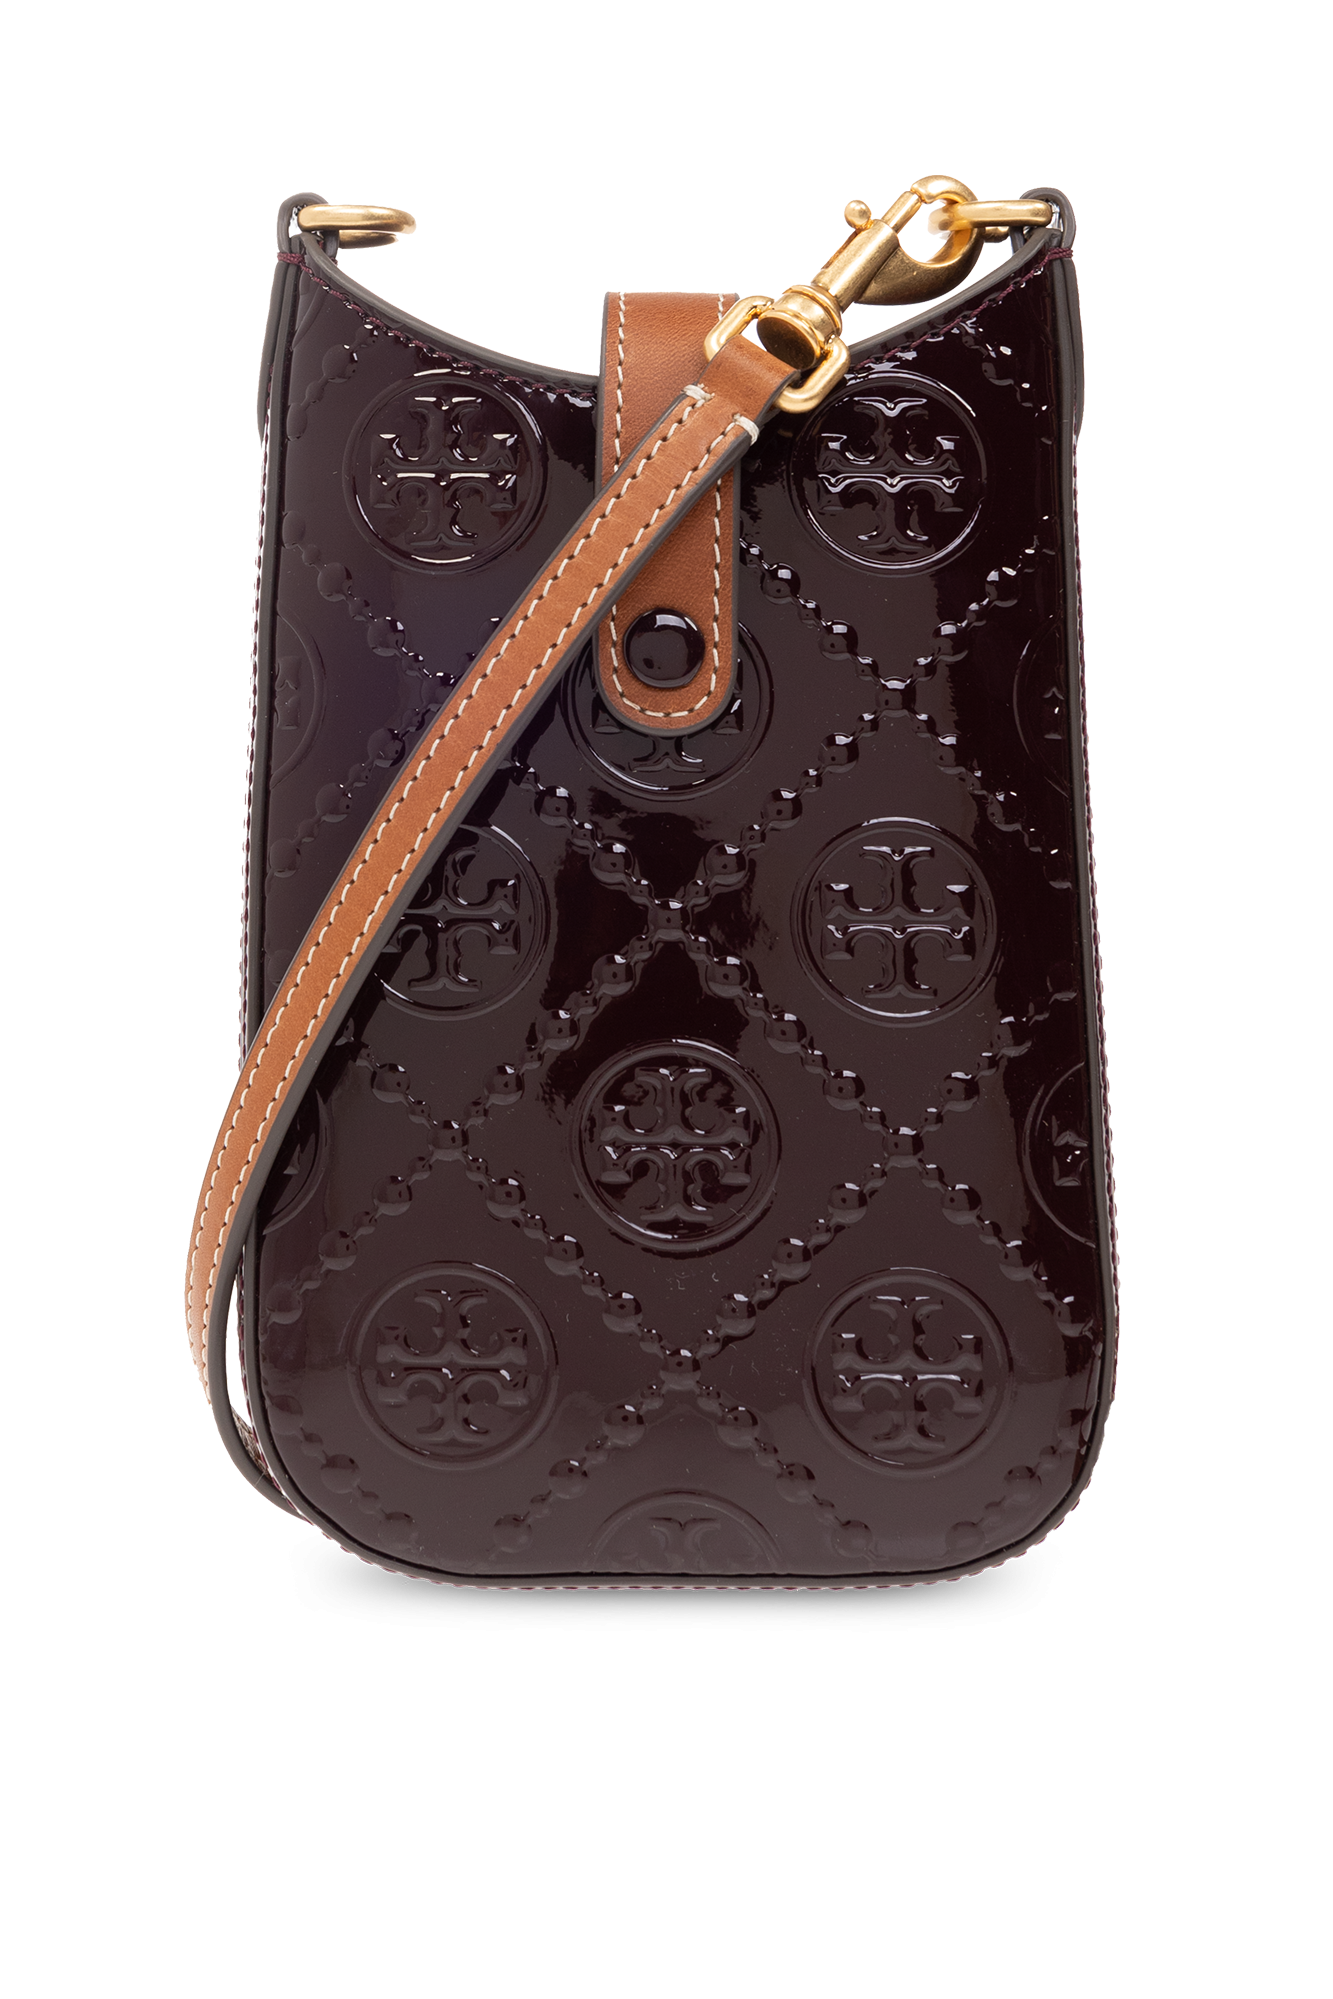 Louis Vuitton Phone Case -  Australia